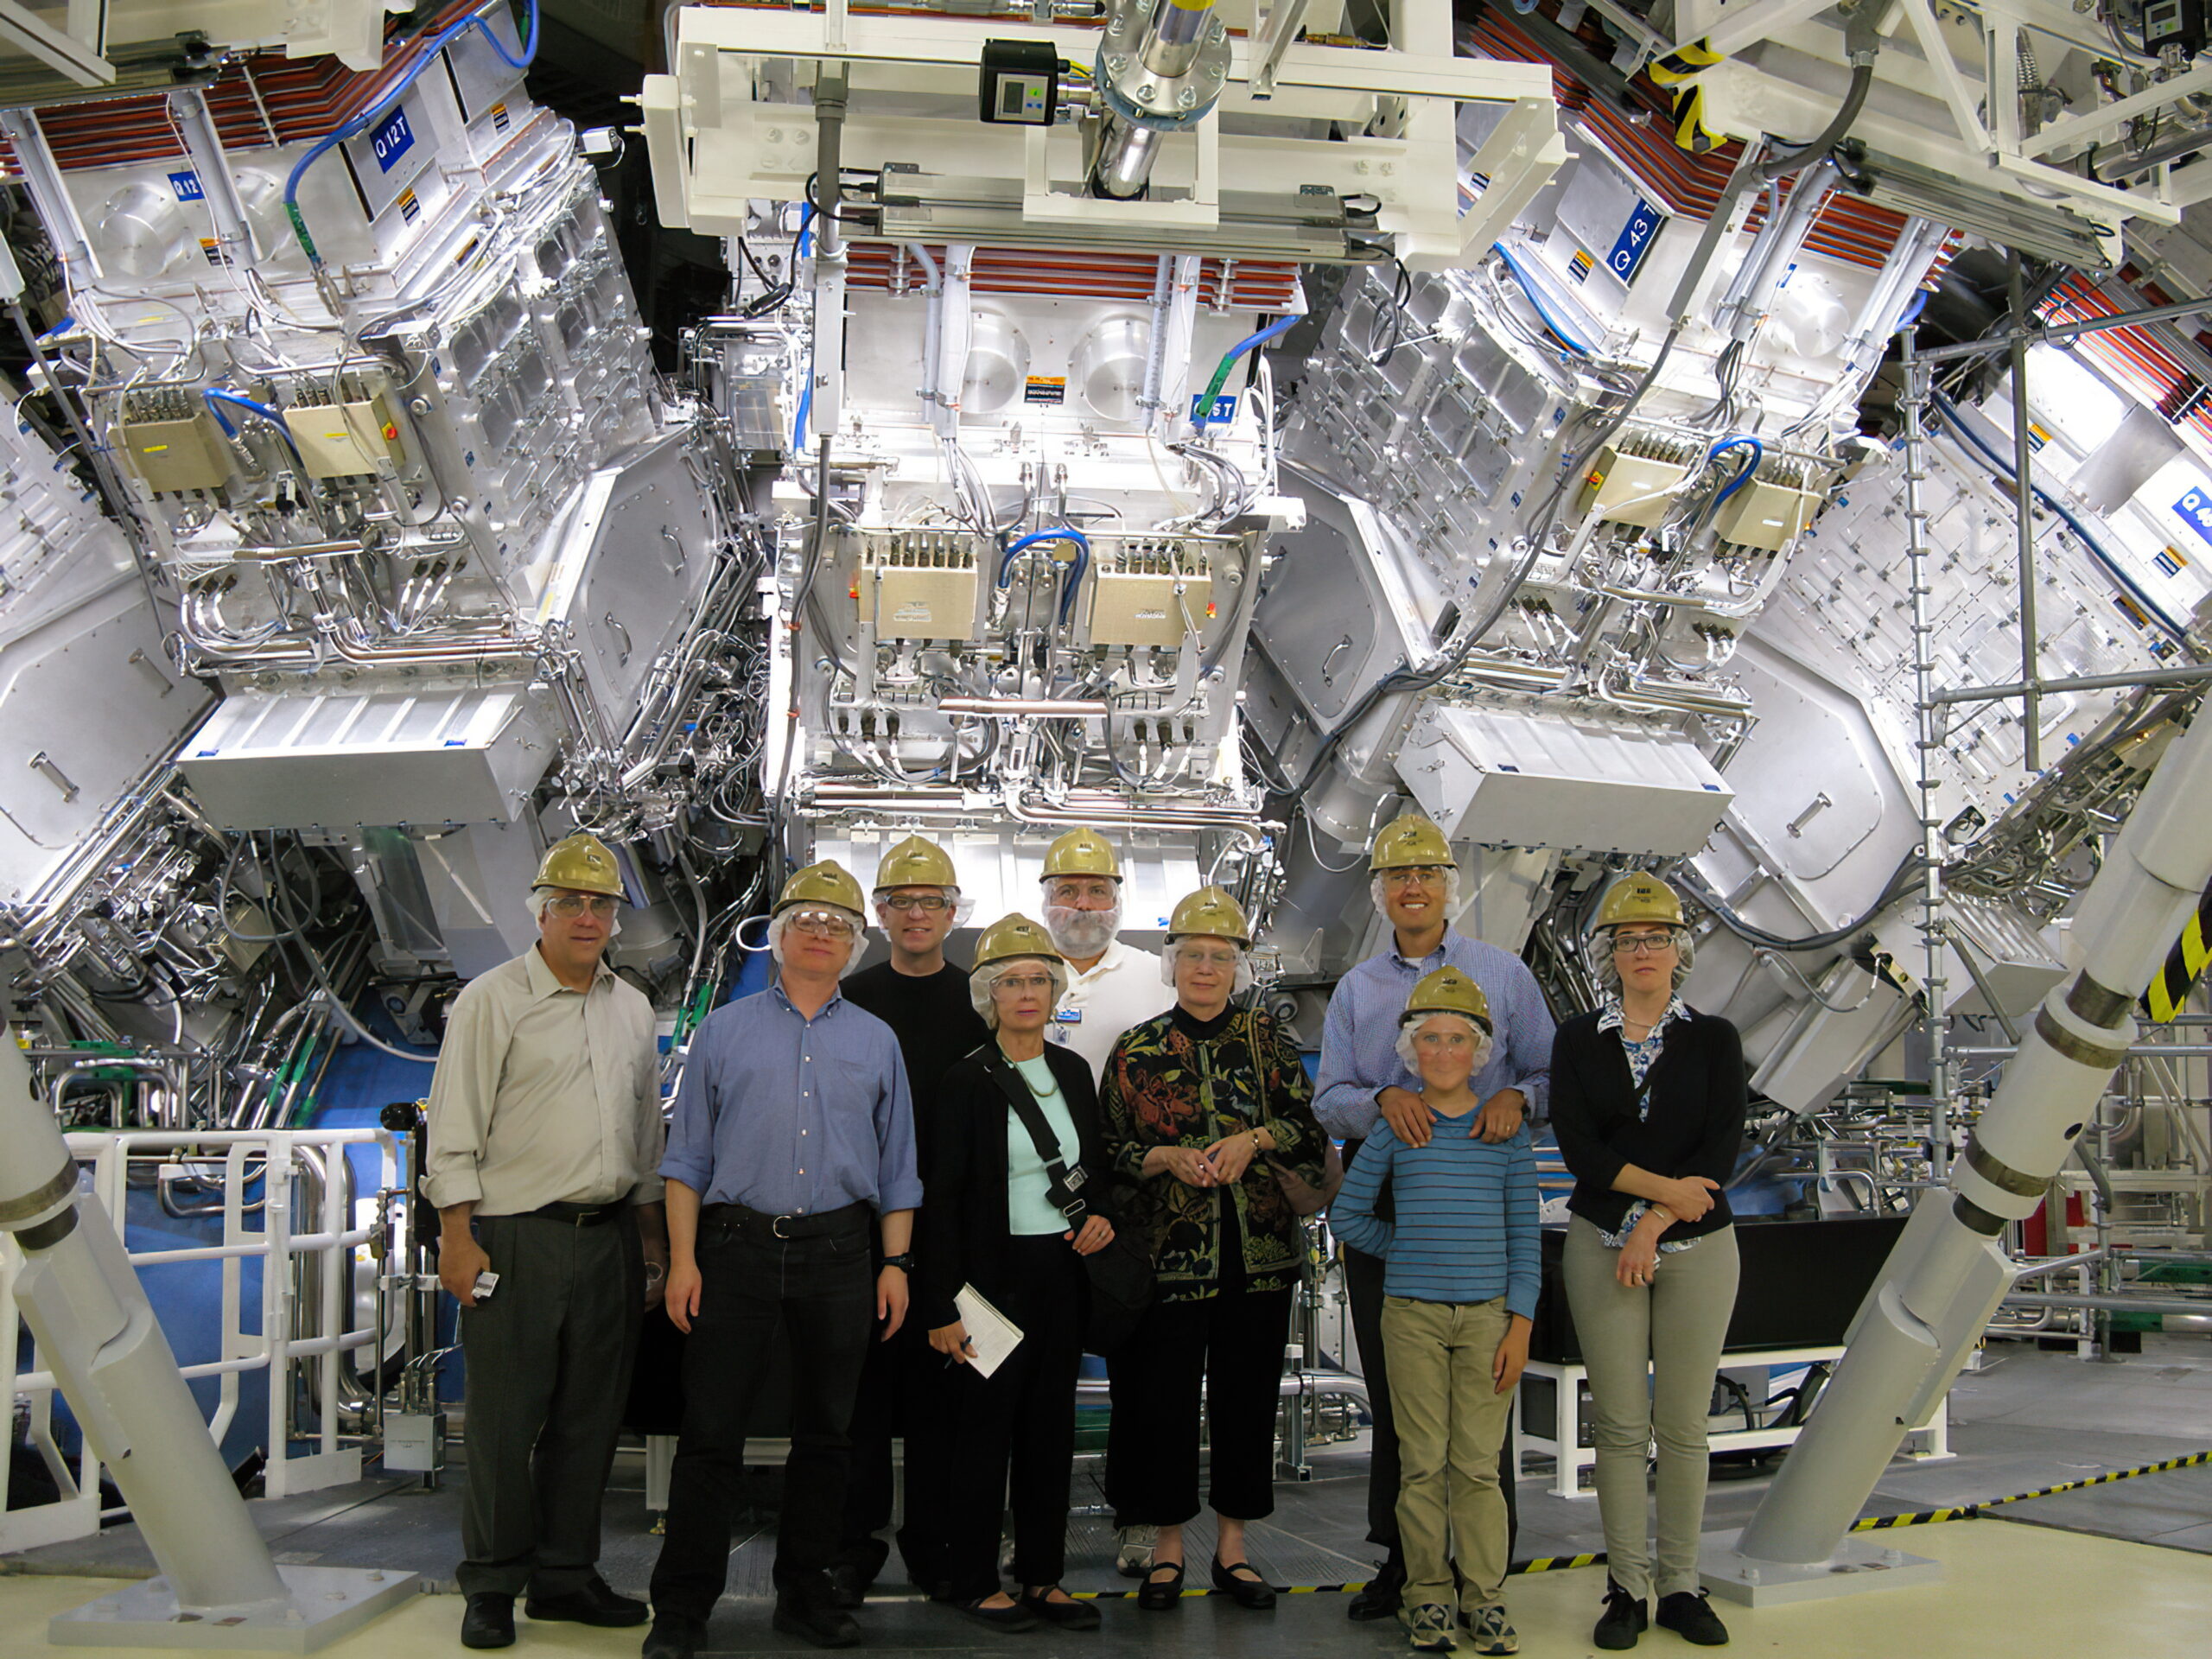 NIF National Ignition Facility fusjon reaktor fusion reactor